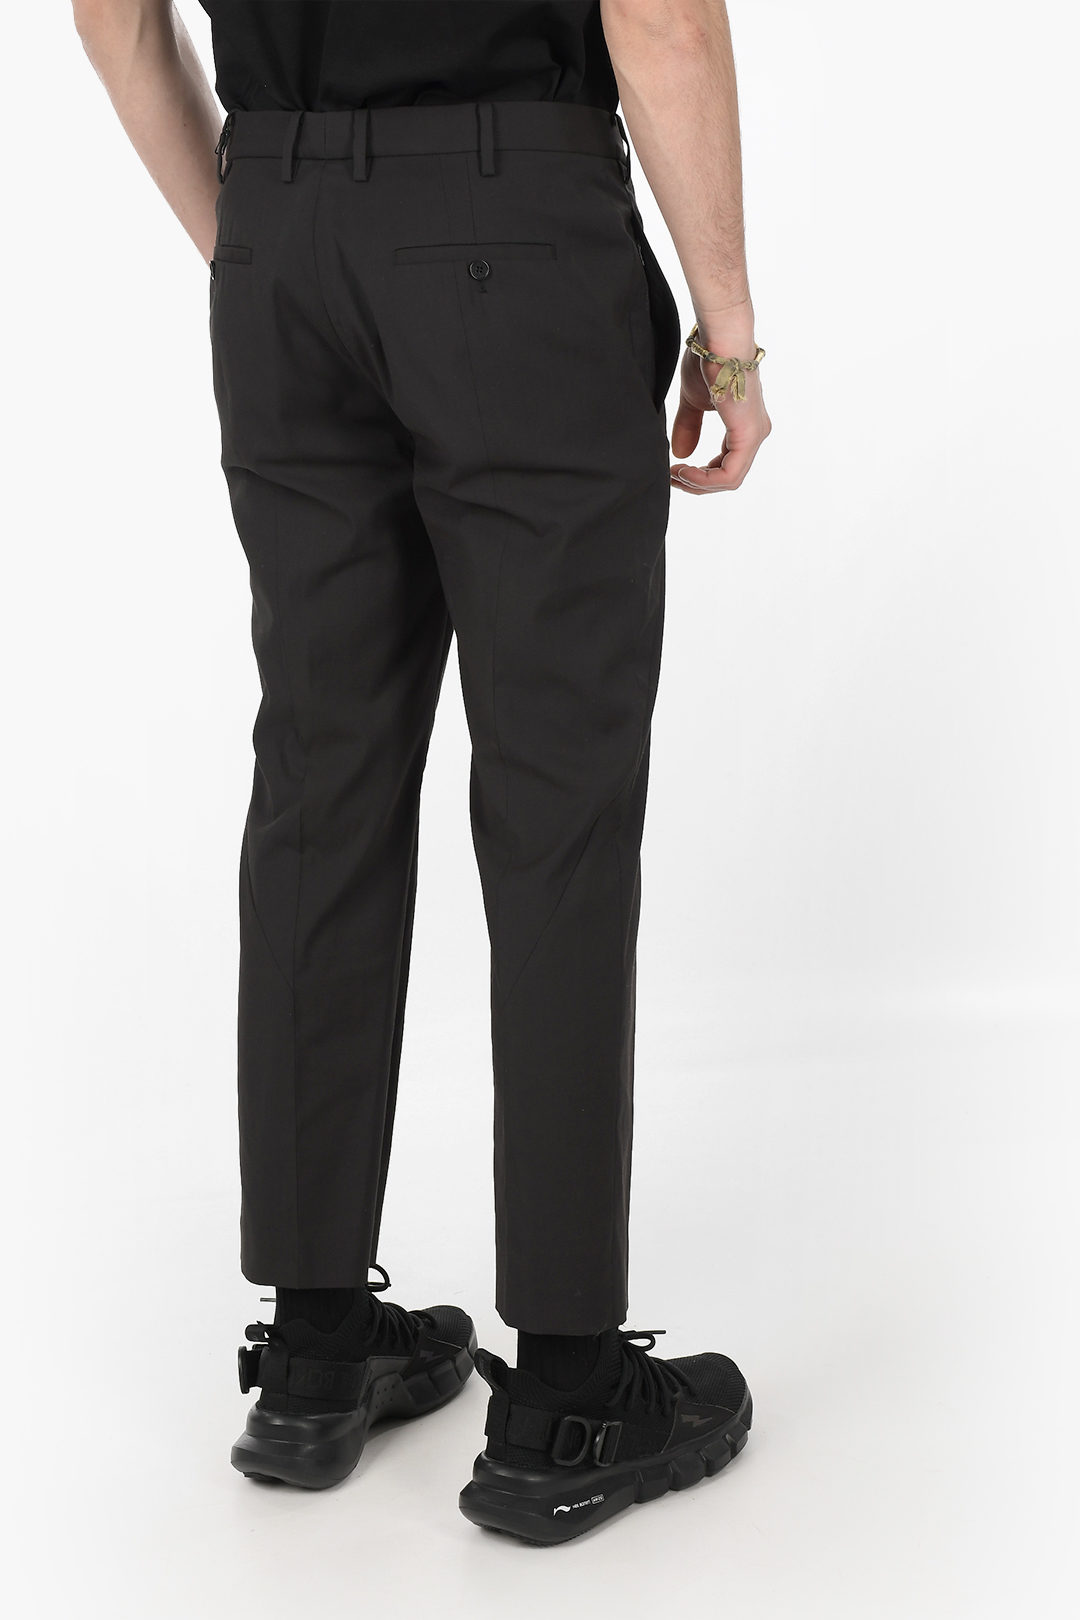 Buy Desigual men double belt loops pants navy and grey combo Online |  Brands For Less